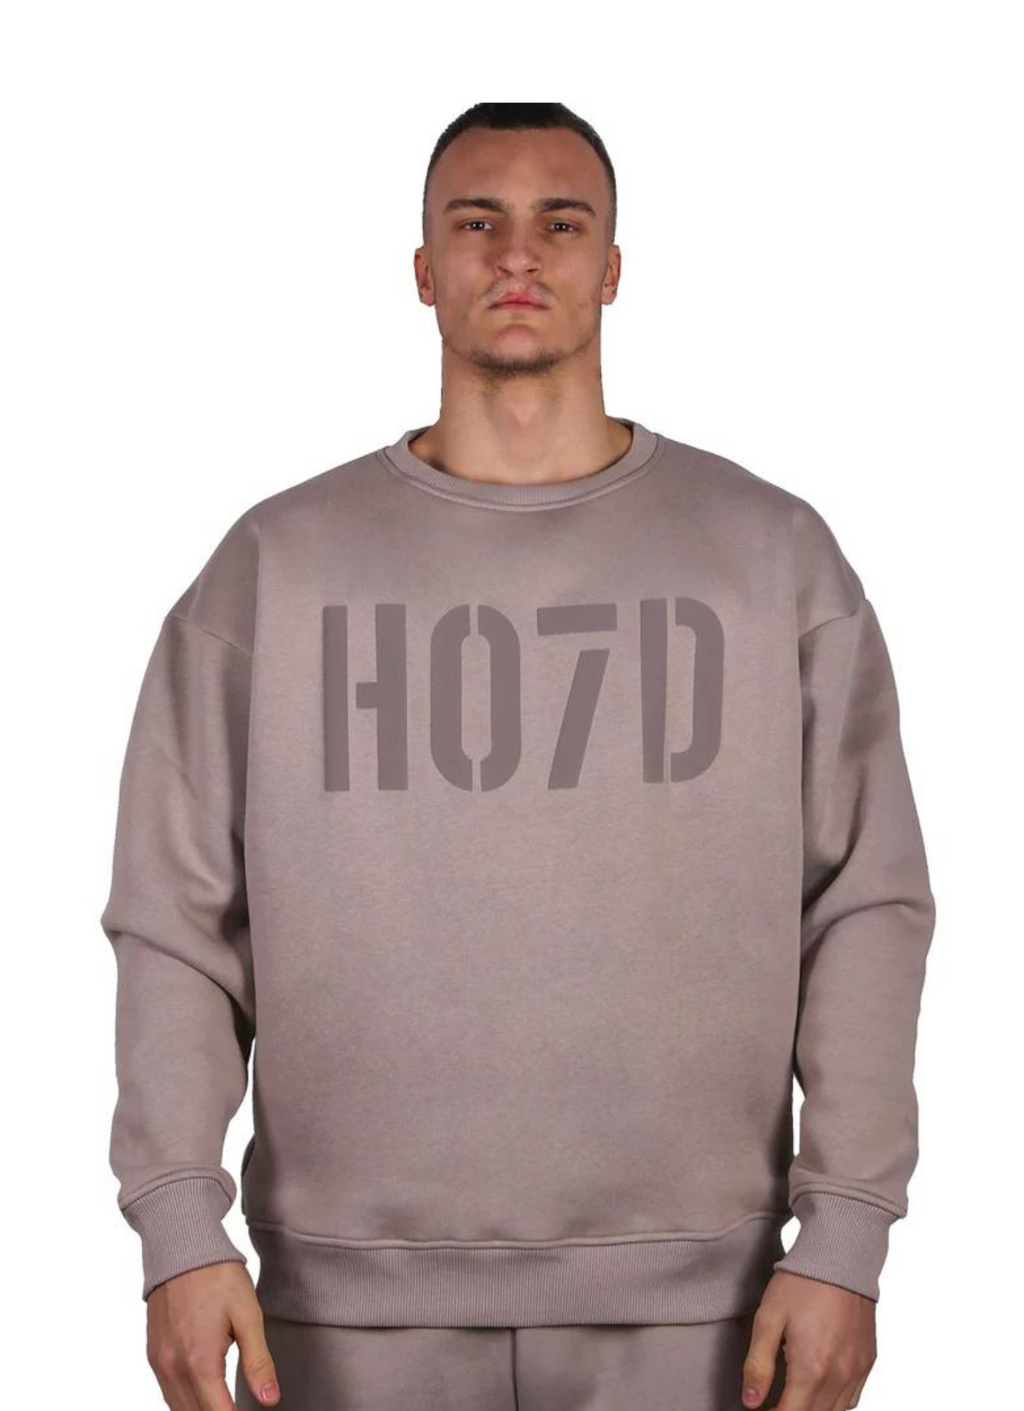 Hoodstar Sweatshirt HO7D Brown